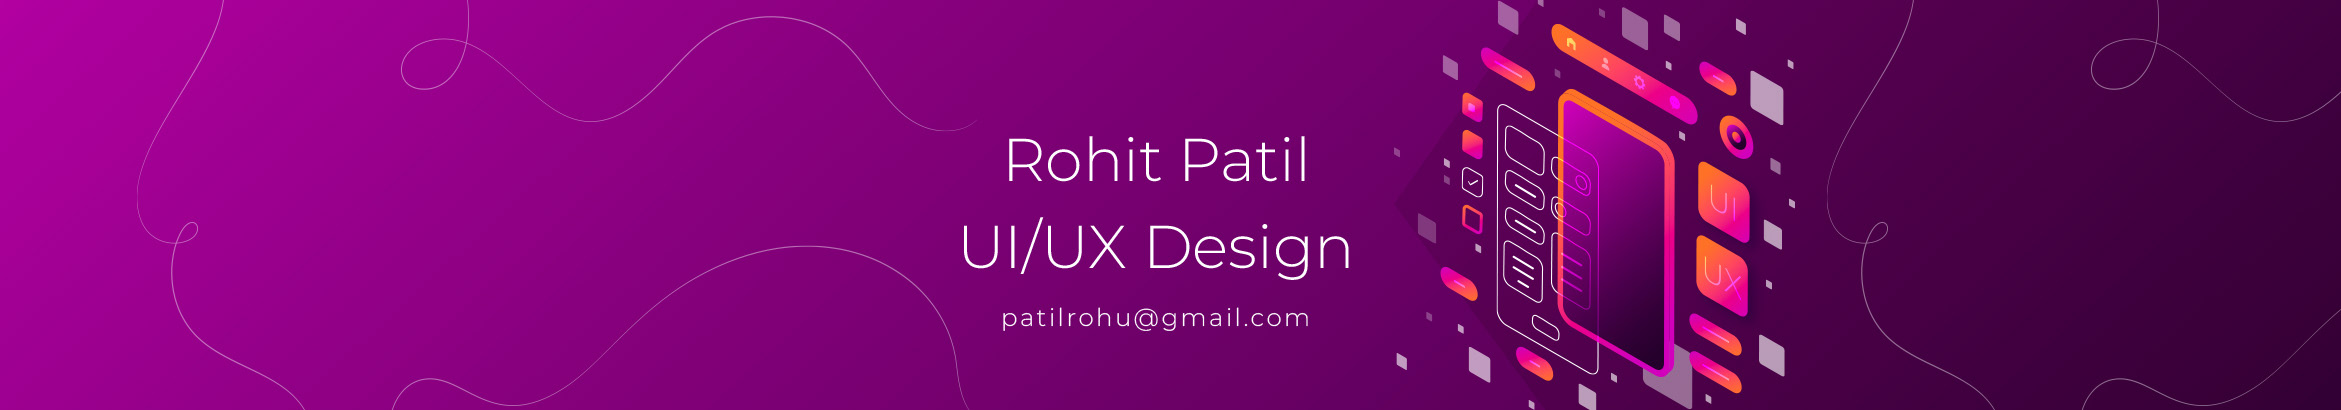 Rohit Patil のプロファイルバナー